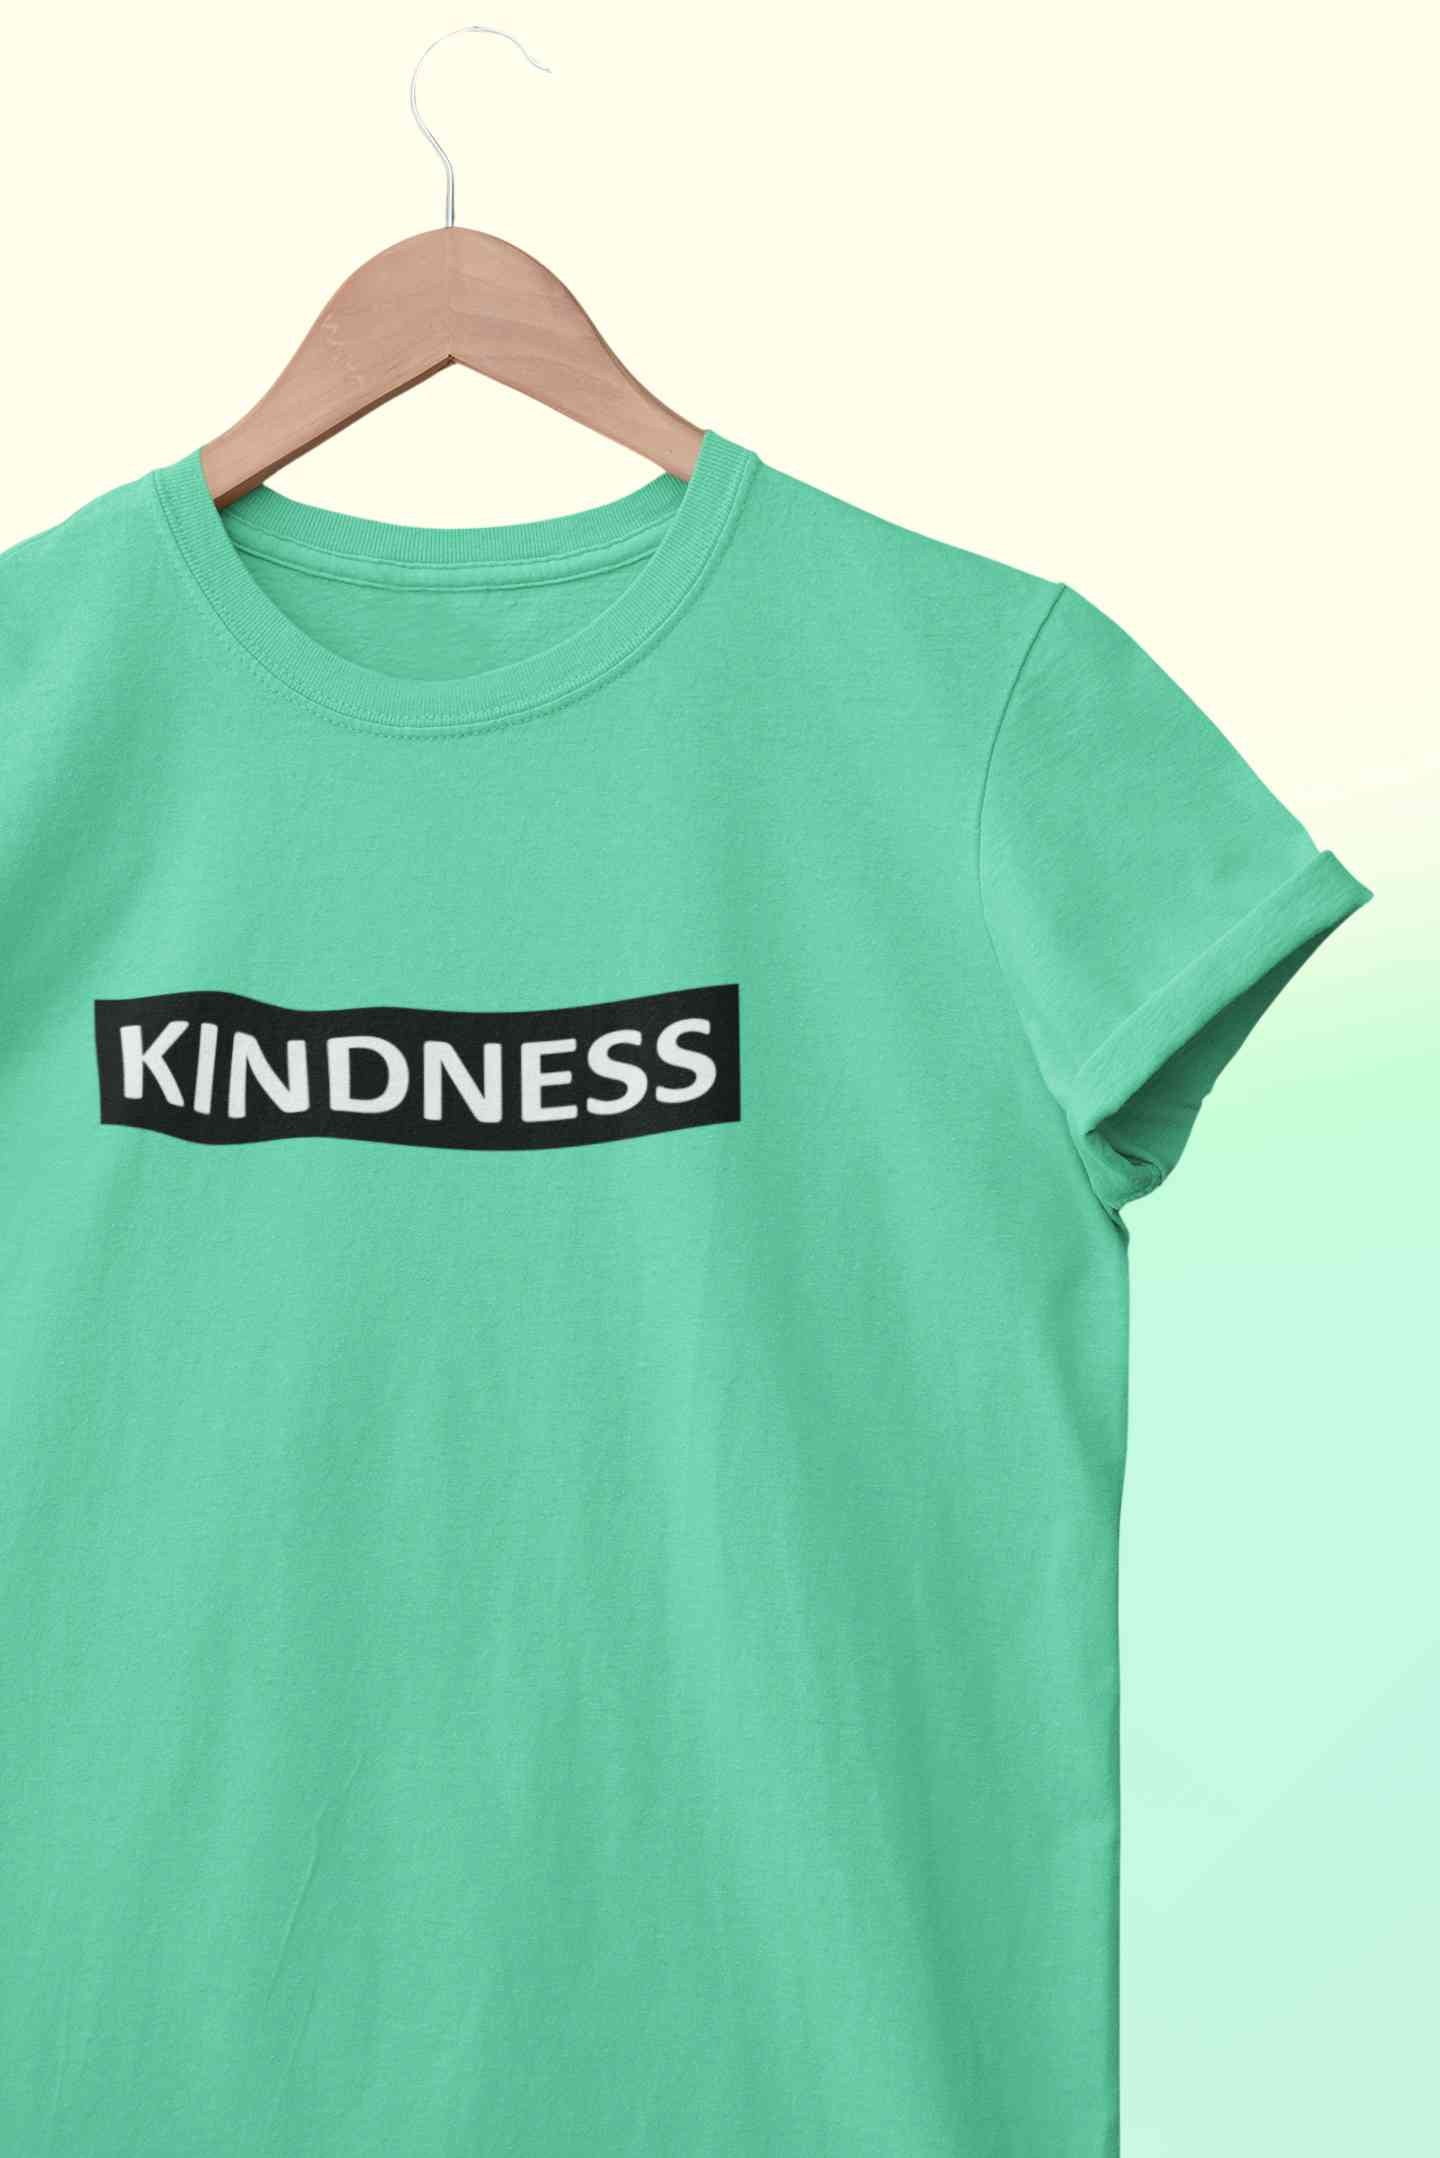 Kindness Women Half Sleeves T-shirt- FunkyTeesClub